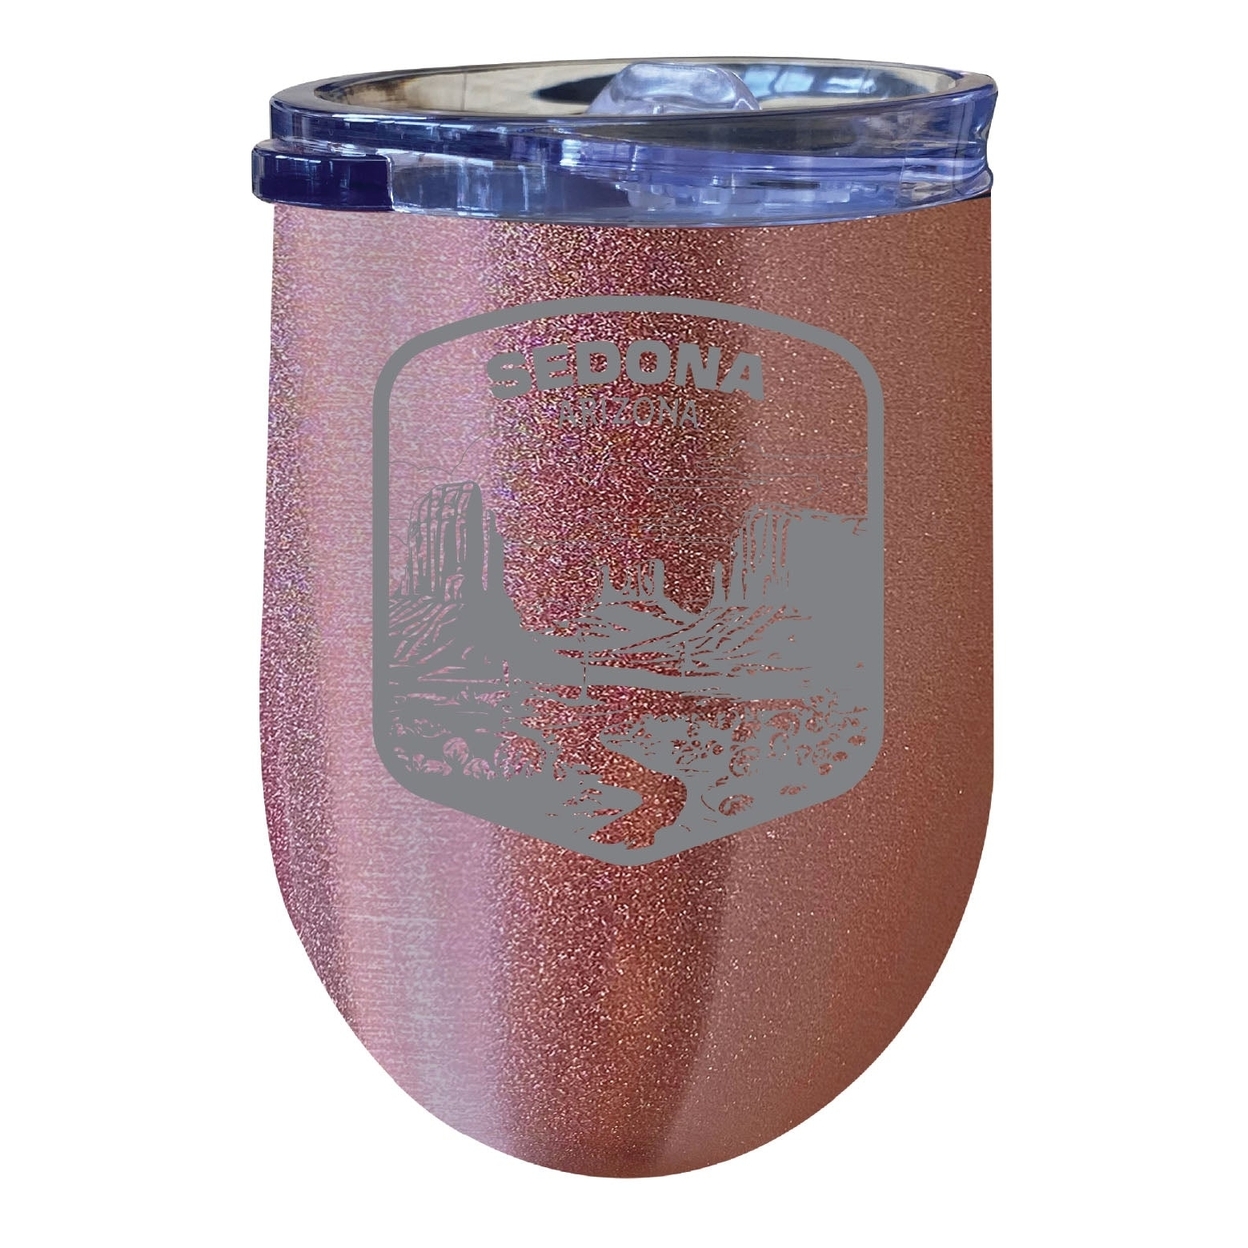 Sedona Arizona Souvenir 12 Oz Engraved Insulated Wine Stainless Steel Tumbler - Rose Gold,,Single Unit